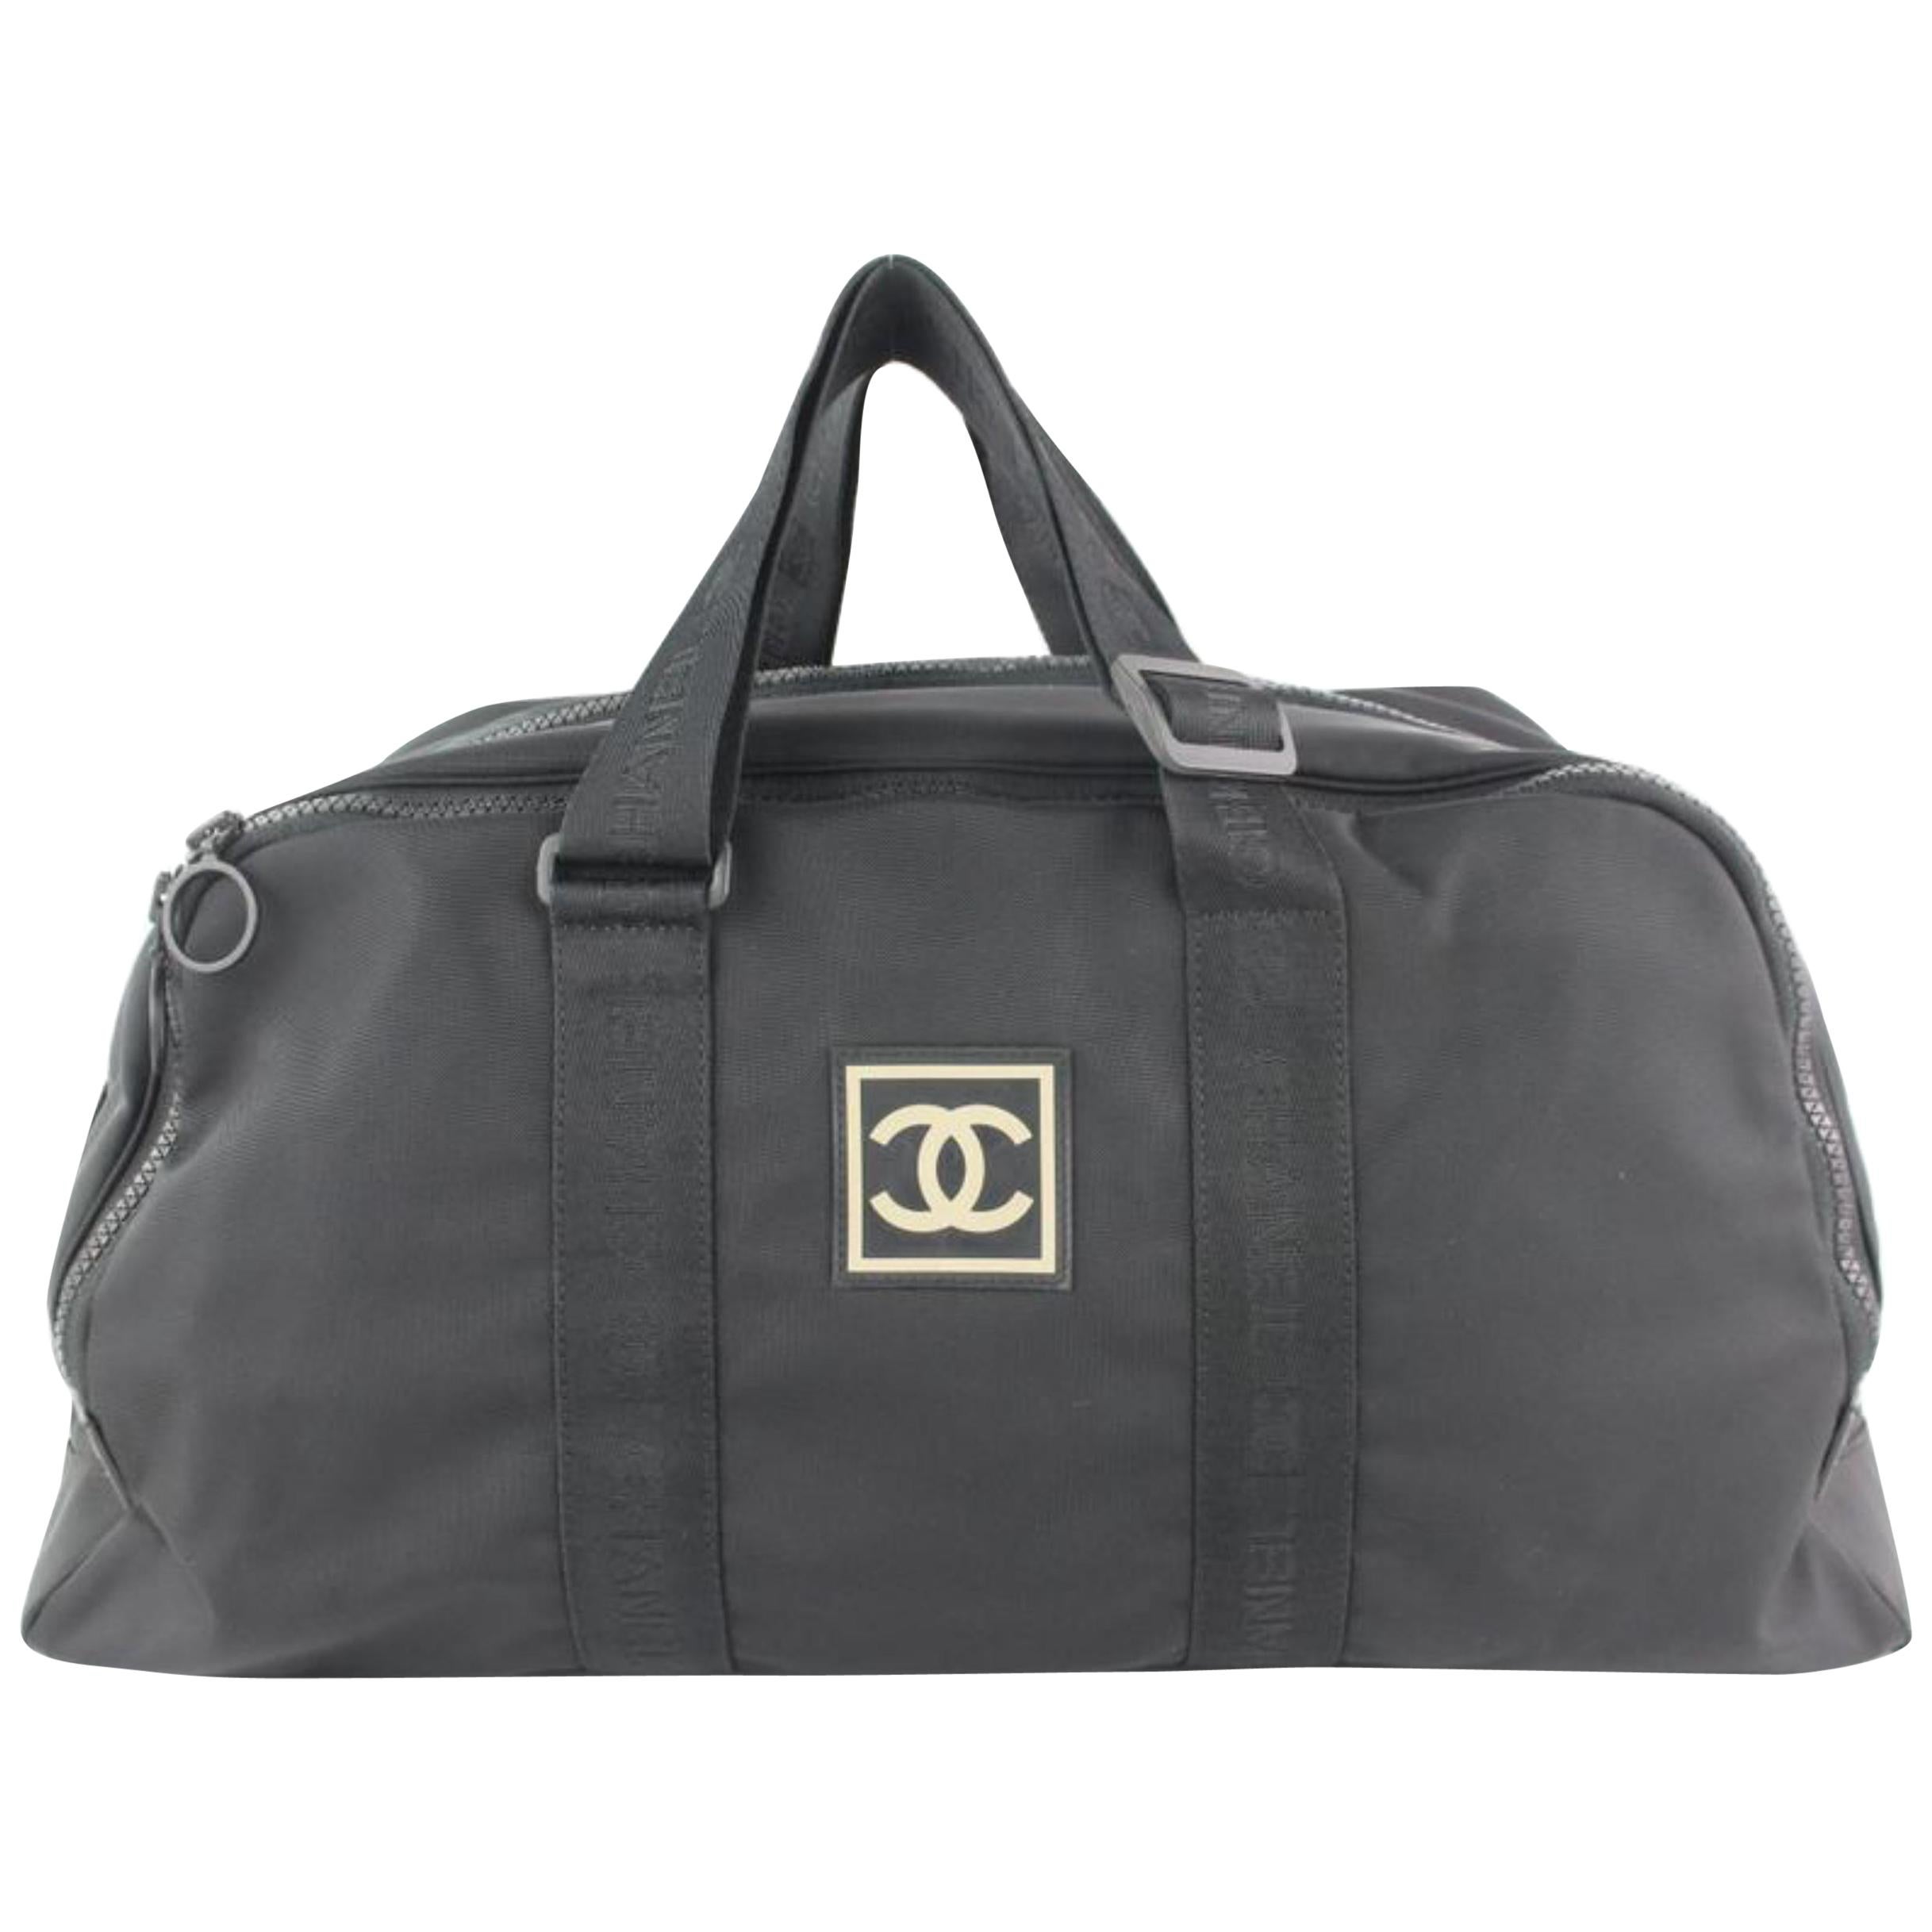 Chanel Duffle Cc Logo Sports Boston 19cz1106 Black Canvas Weekend/Travel Bag For Sale